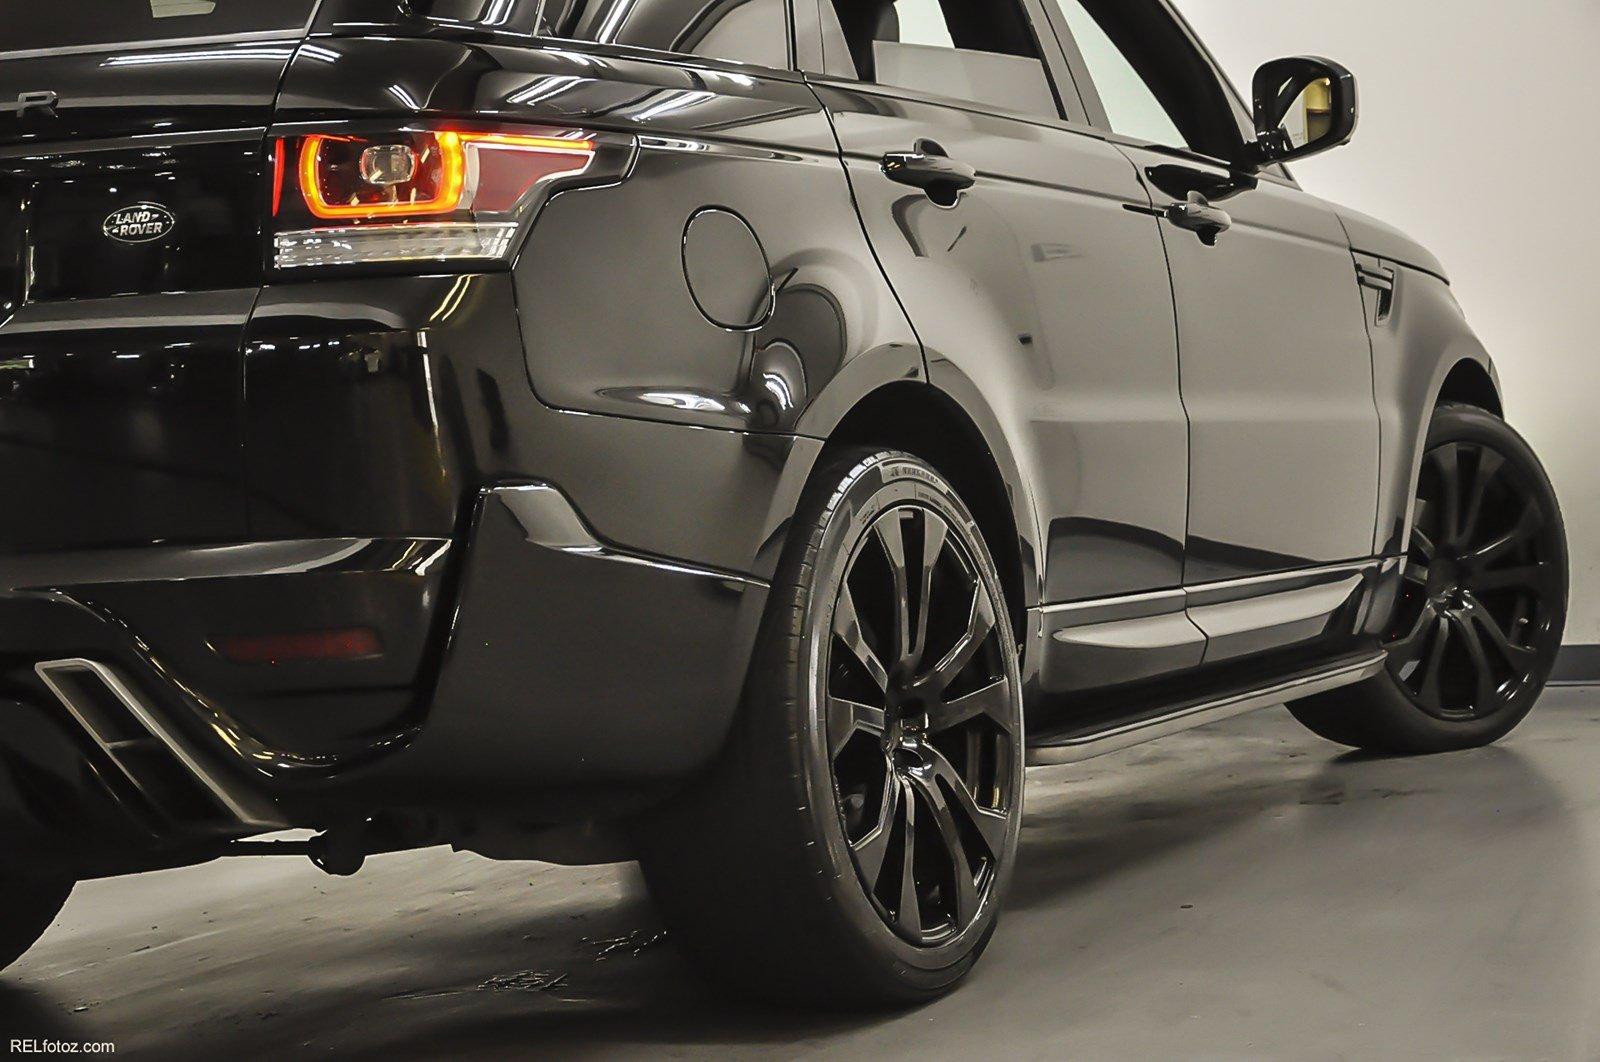 Used 2014 Land Rover Range Rover Sport HSE for sale Sold at Gravity Autos Marietta in Marietta GA 30060 7